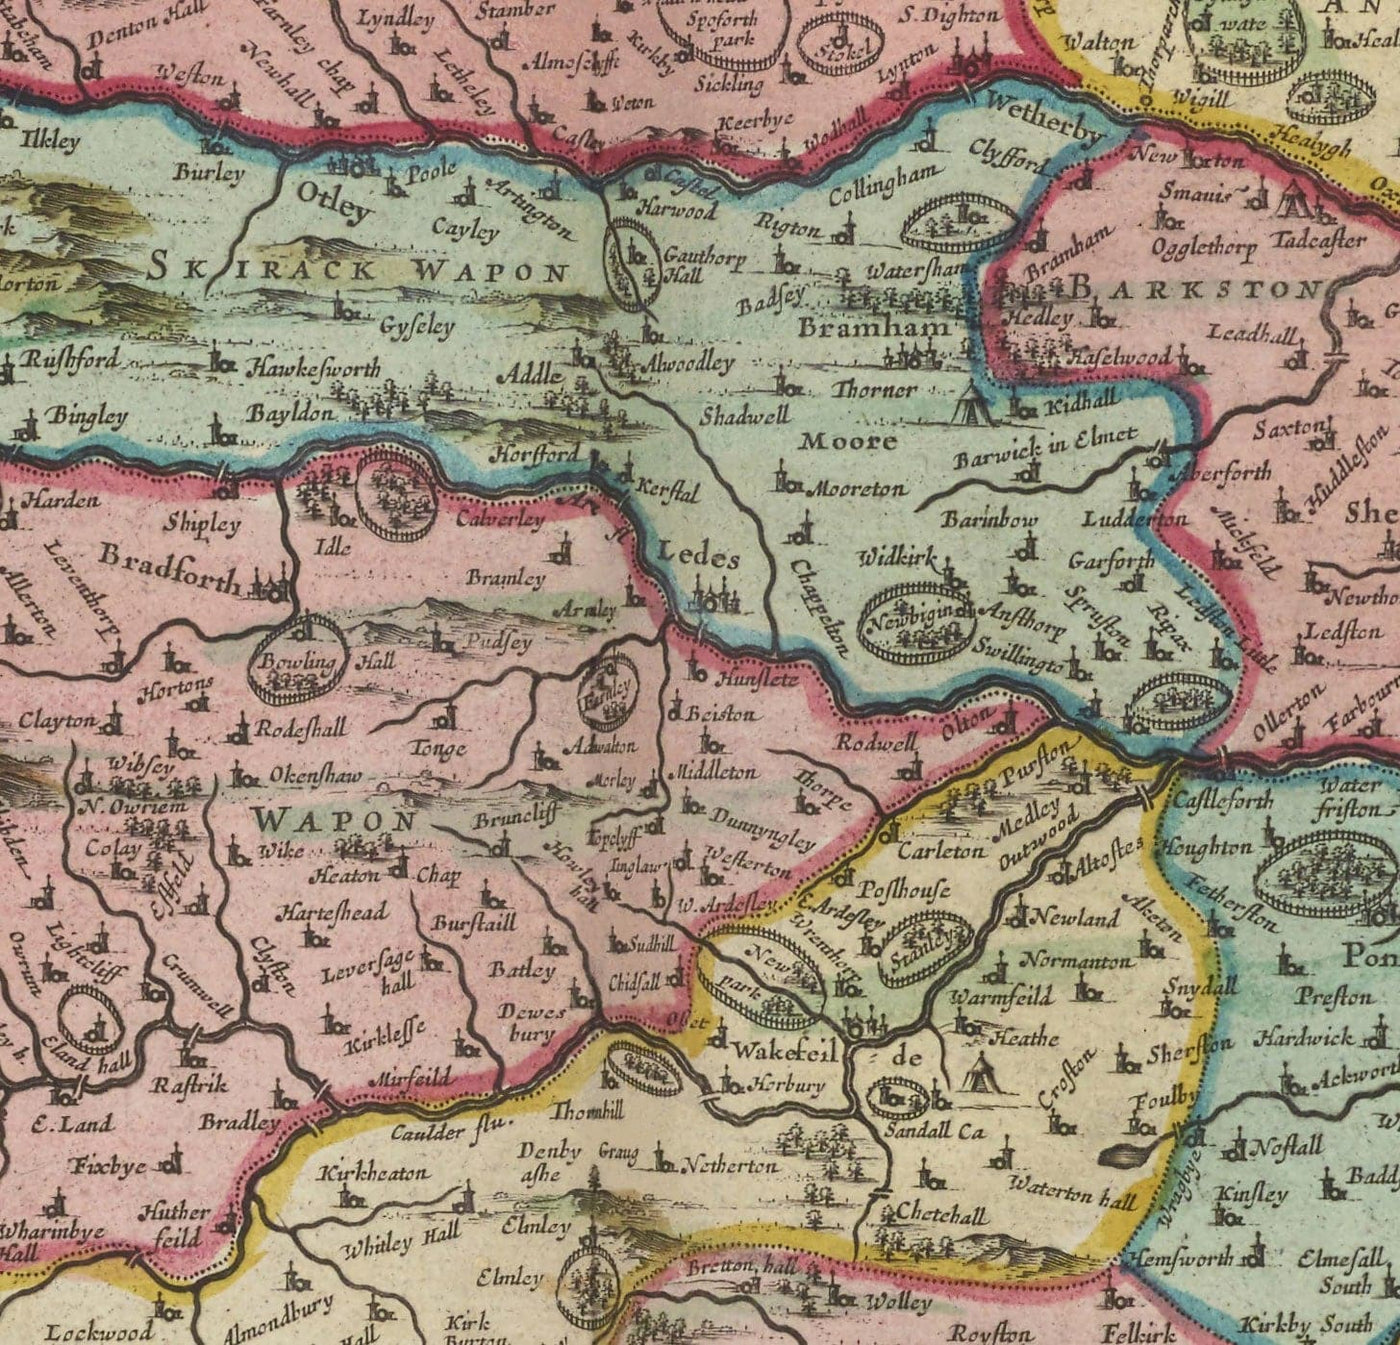 Old Map of West Yorkshire, 1665 by Joan Blaeu - York, Bradford, Sheffield, Leeds, Huddersfield, Halifax, Wakefield